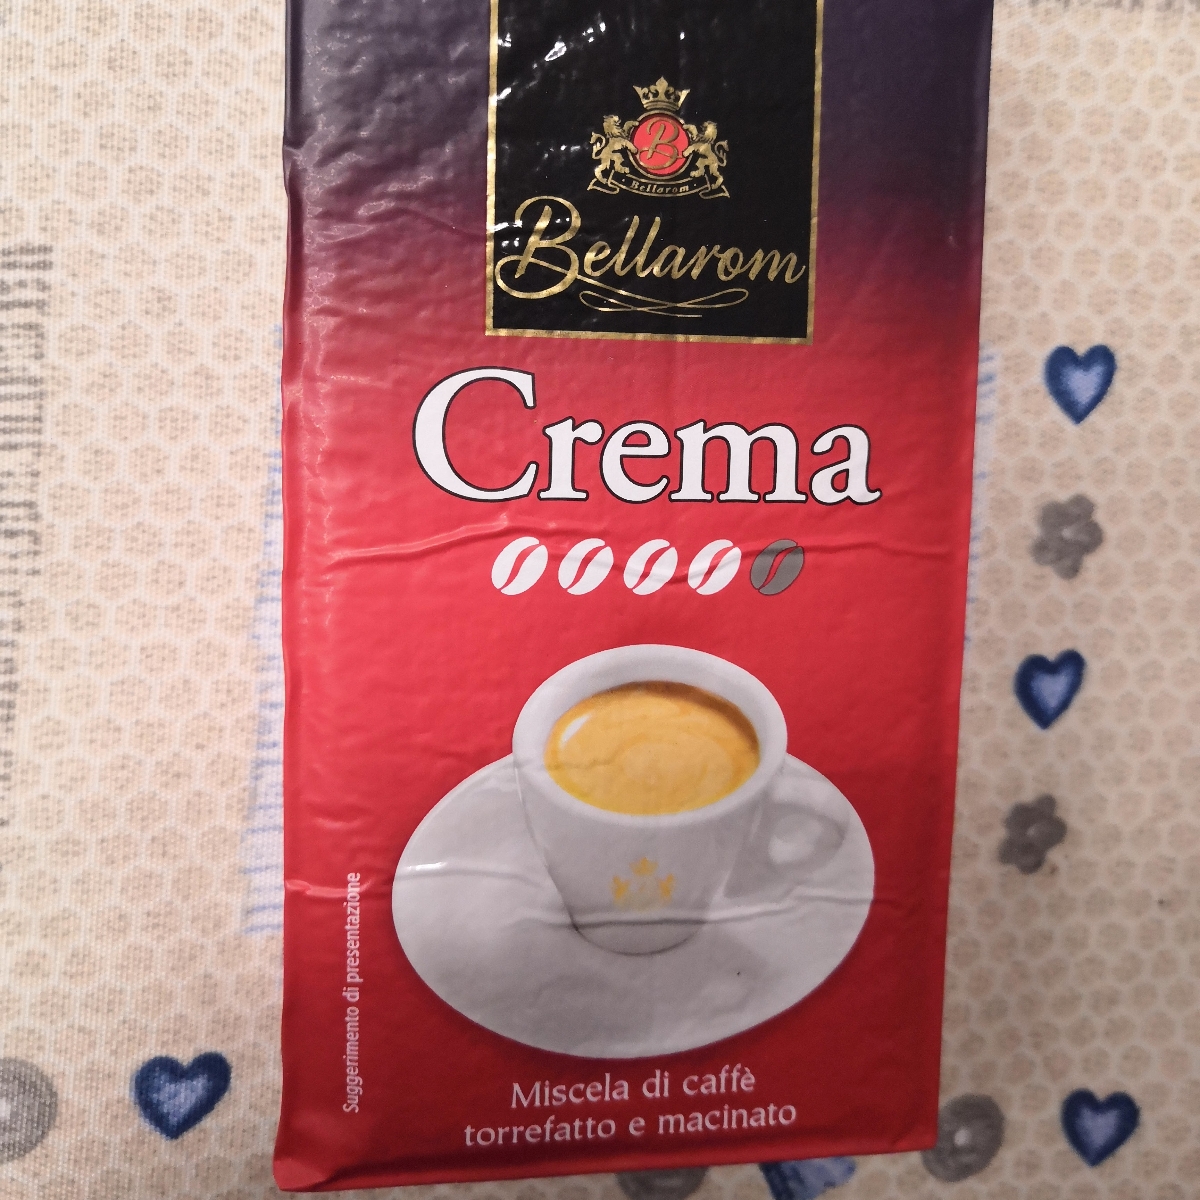 Bellarom Crema Miscela Di Caffè Reviews | abillion